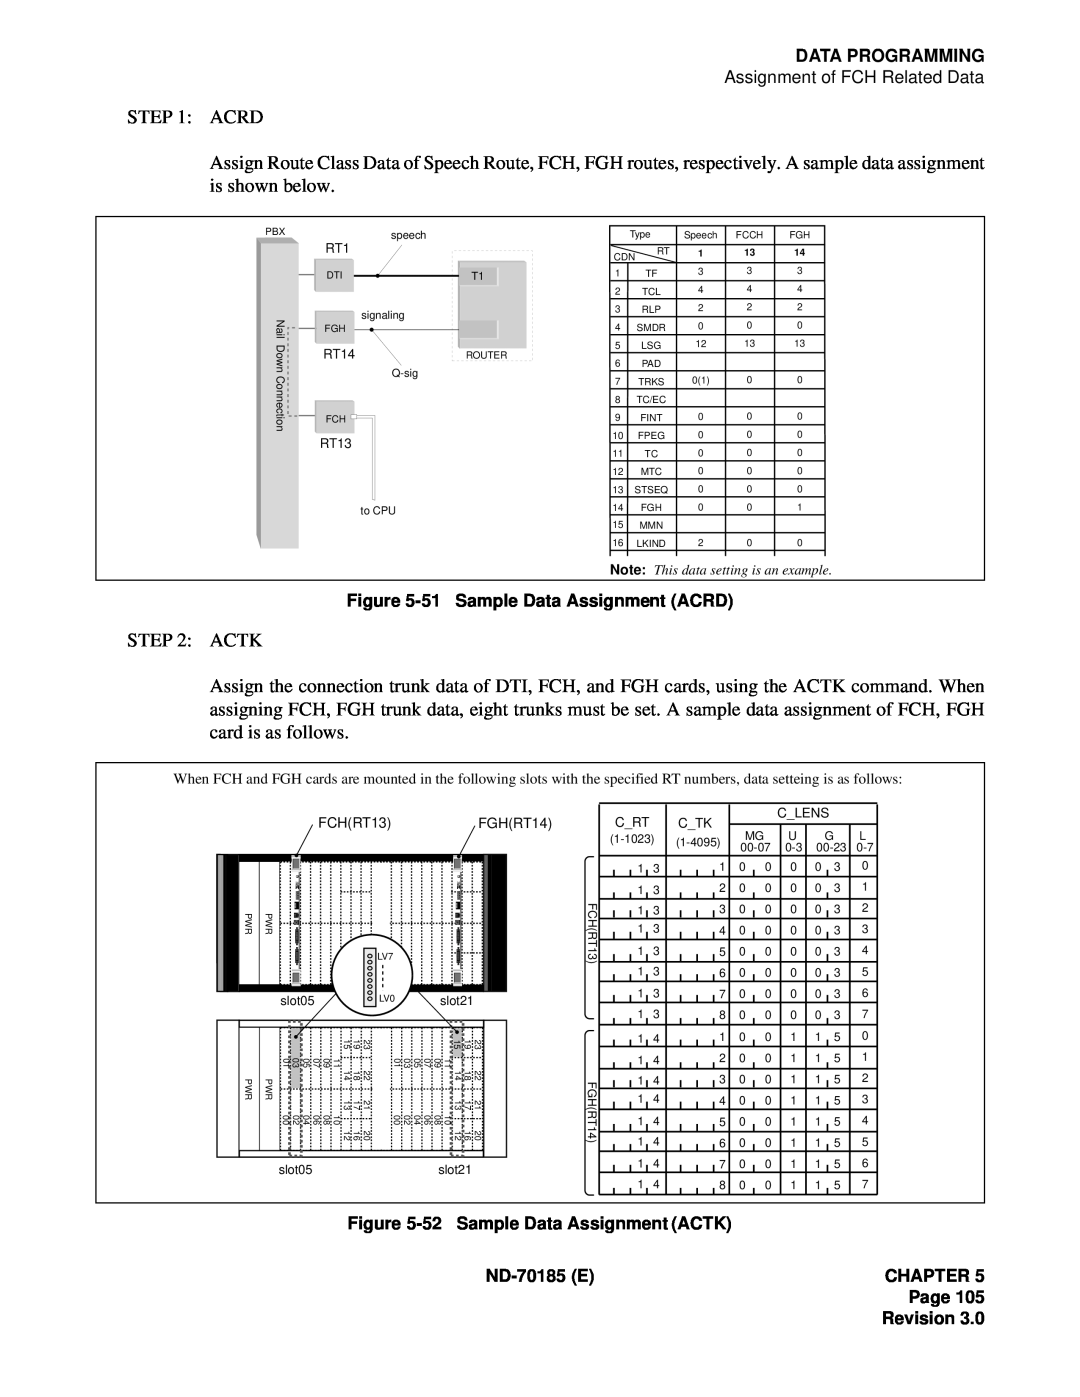 NEC NEAX2400 system manual Data Programming, 51Sample Data Assignment ACRD, 52Sample Data Assignment ACTK 